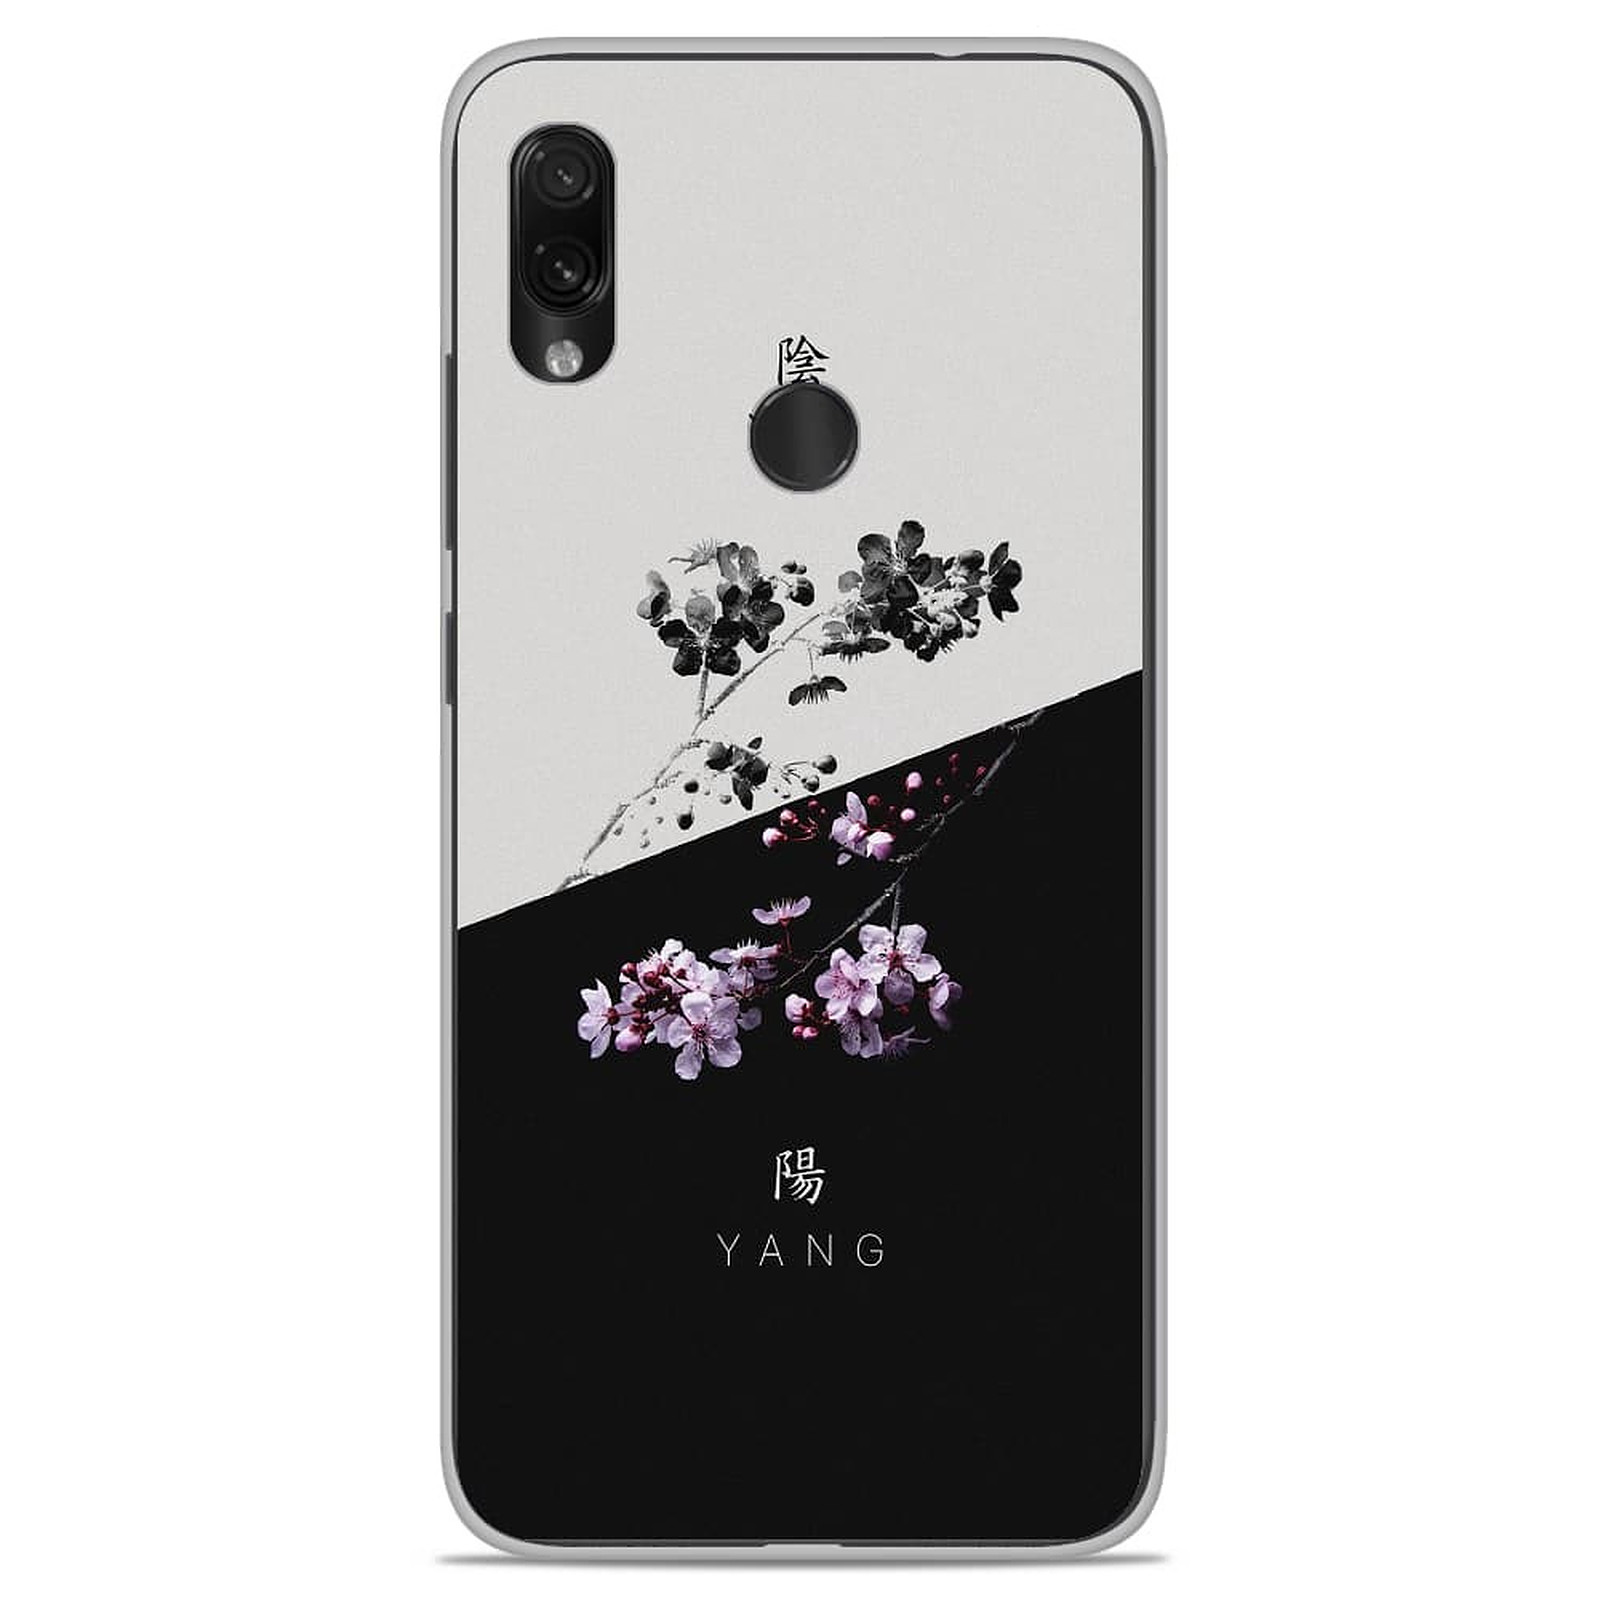 1001 Coques Coque silicone gel Xiaomi Redmi Note 7 / Note 7 Pro motif Yin et Yang - Coque telephone 1001Coques